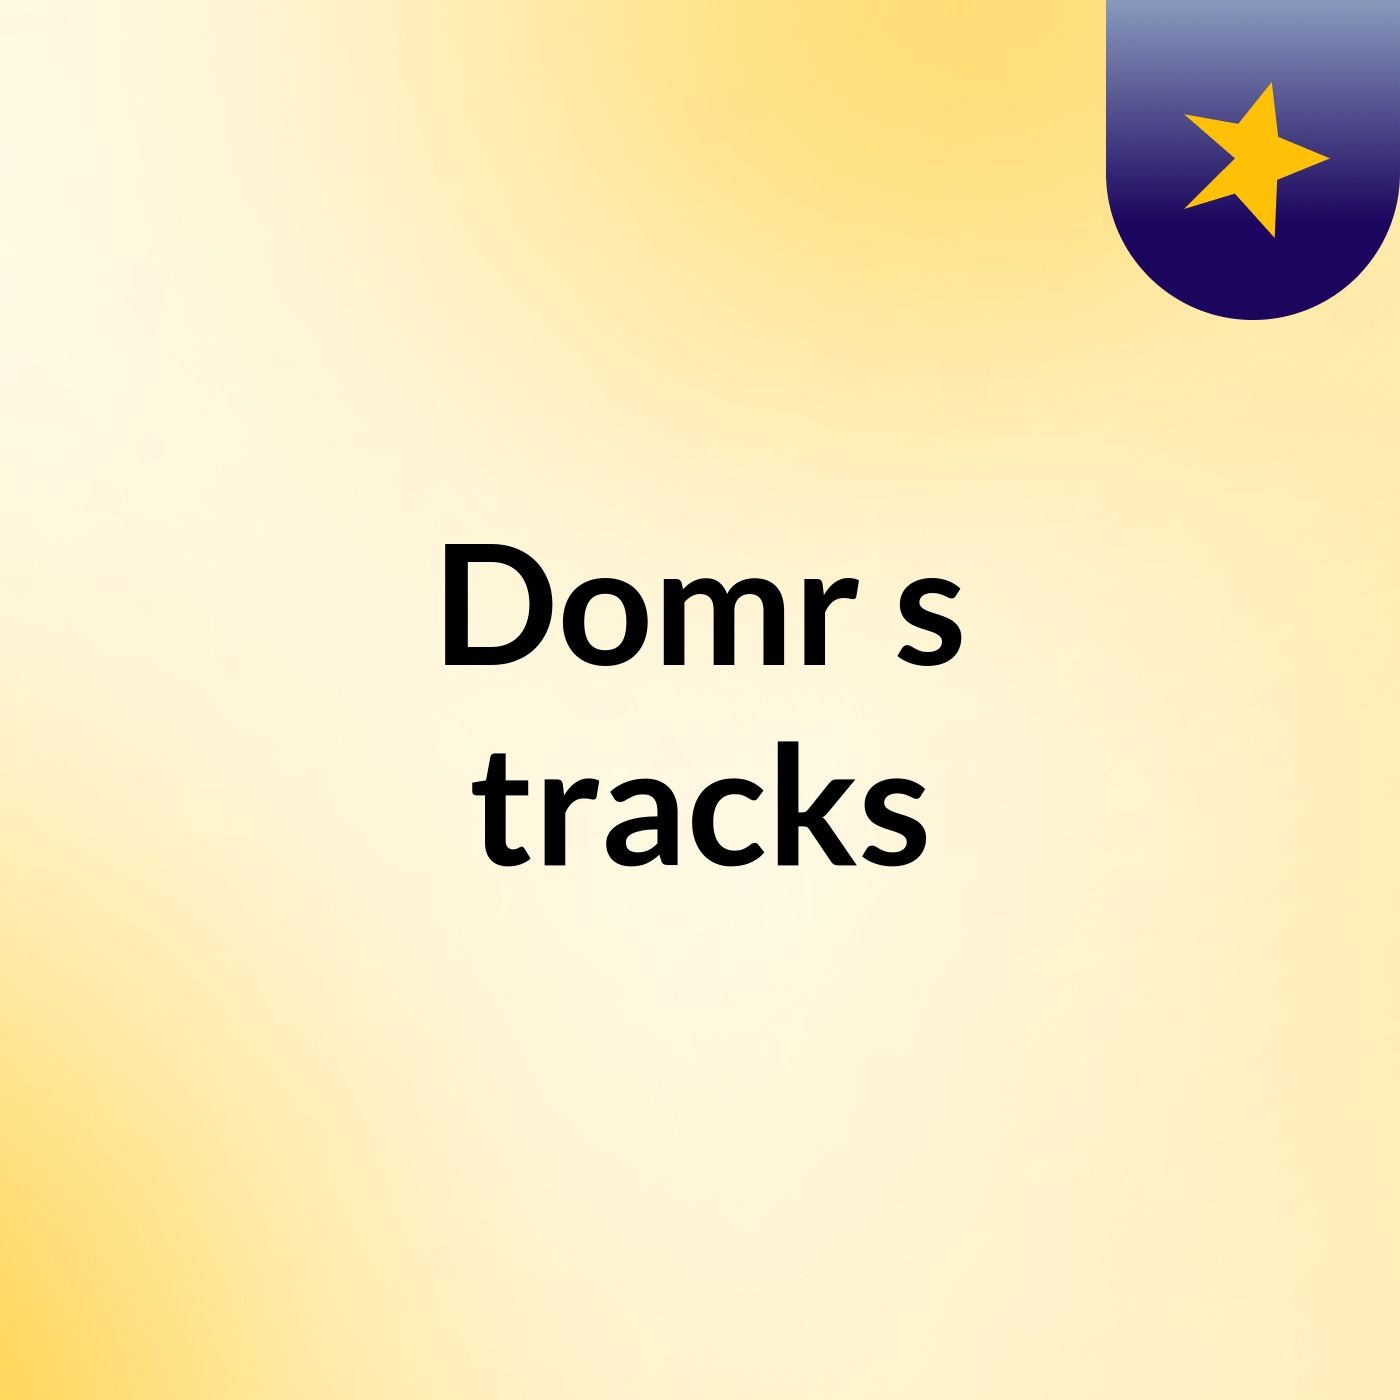 Domr's tracks